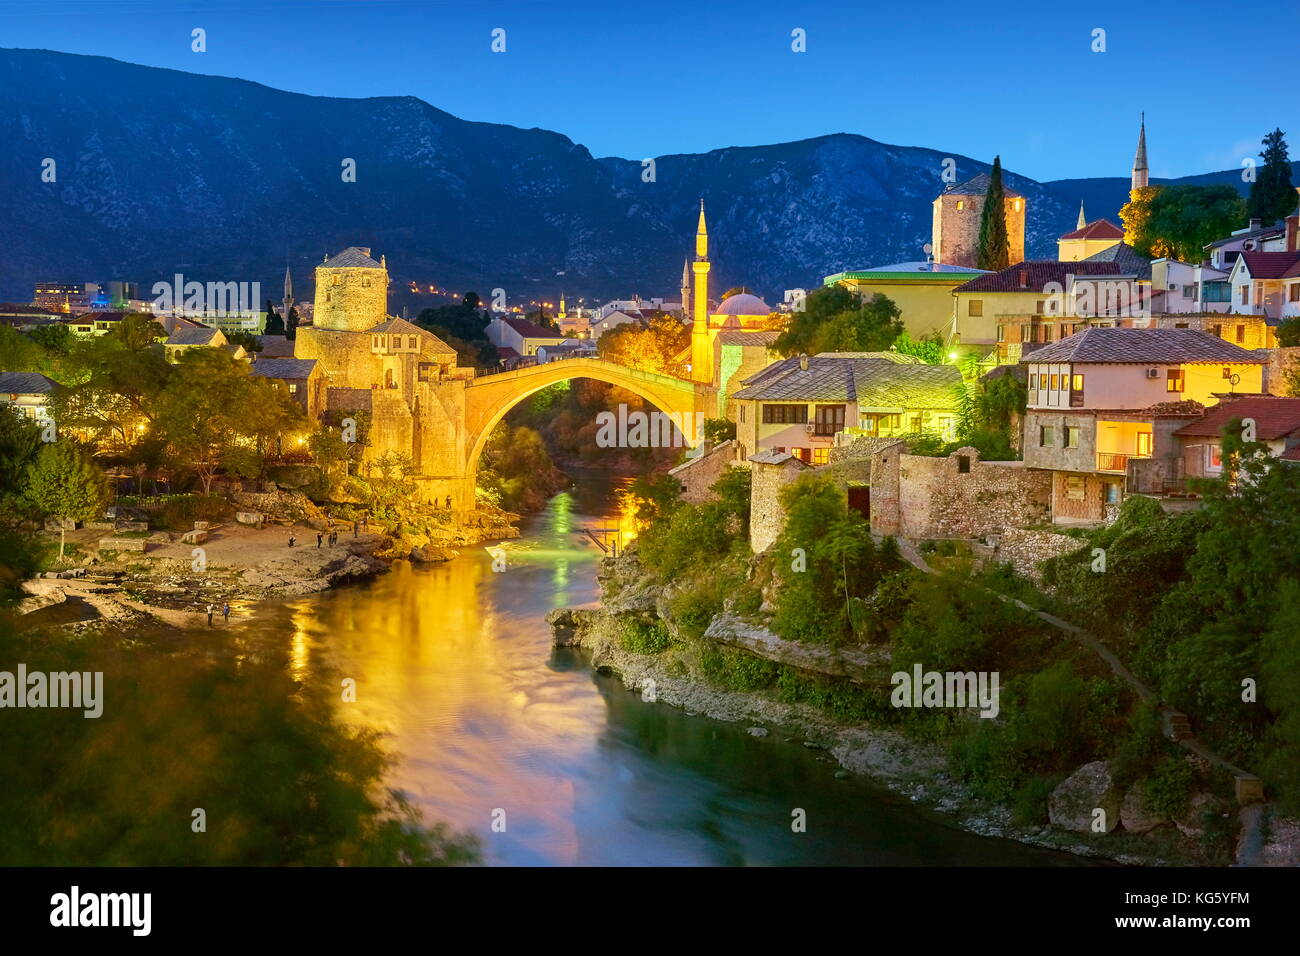 Mostar, Bosnia and Herzegovina - evening view at Stari Most or Old Bridge, Neretva River Stock Photo